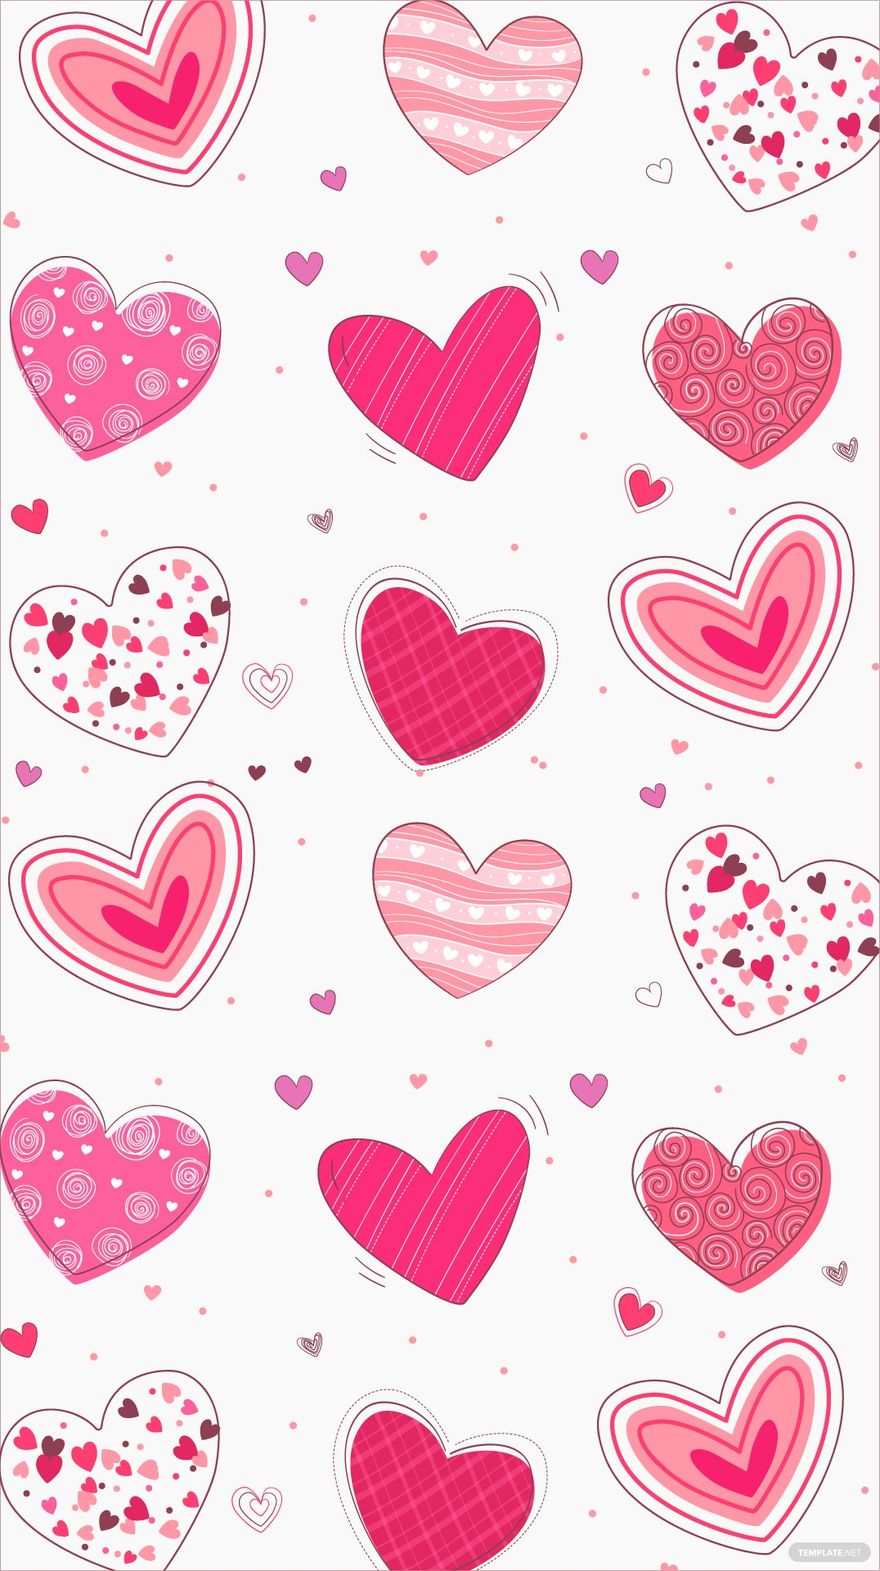 Free Heart Pattern Background in Illustrator, EPS, SVG, JPG